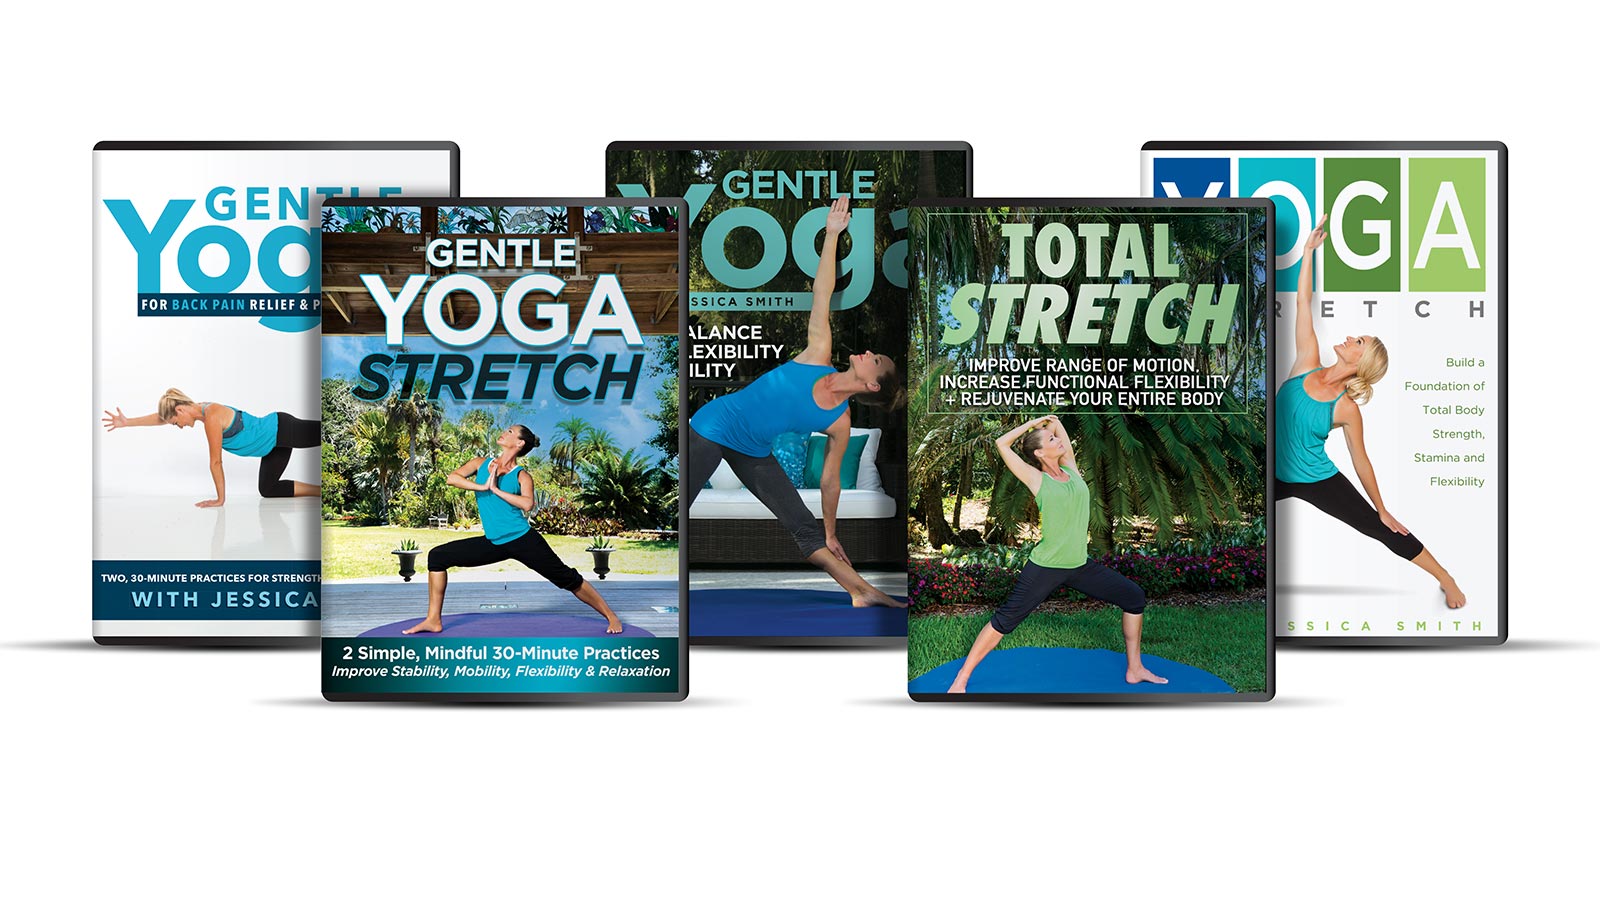 Gentle Yoga + Stretch - Jessica Smith TV